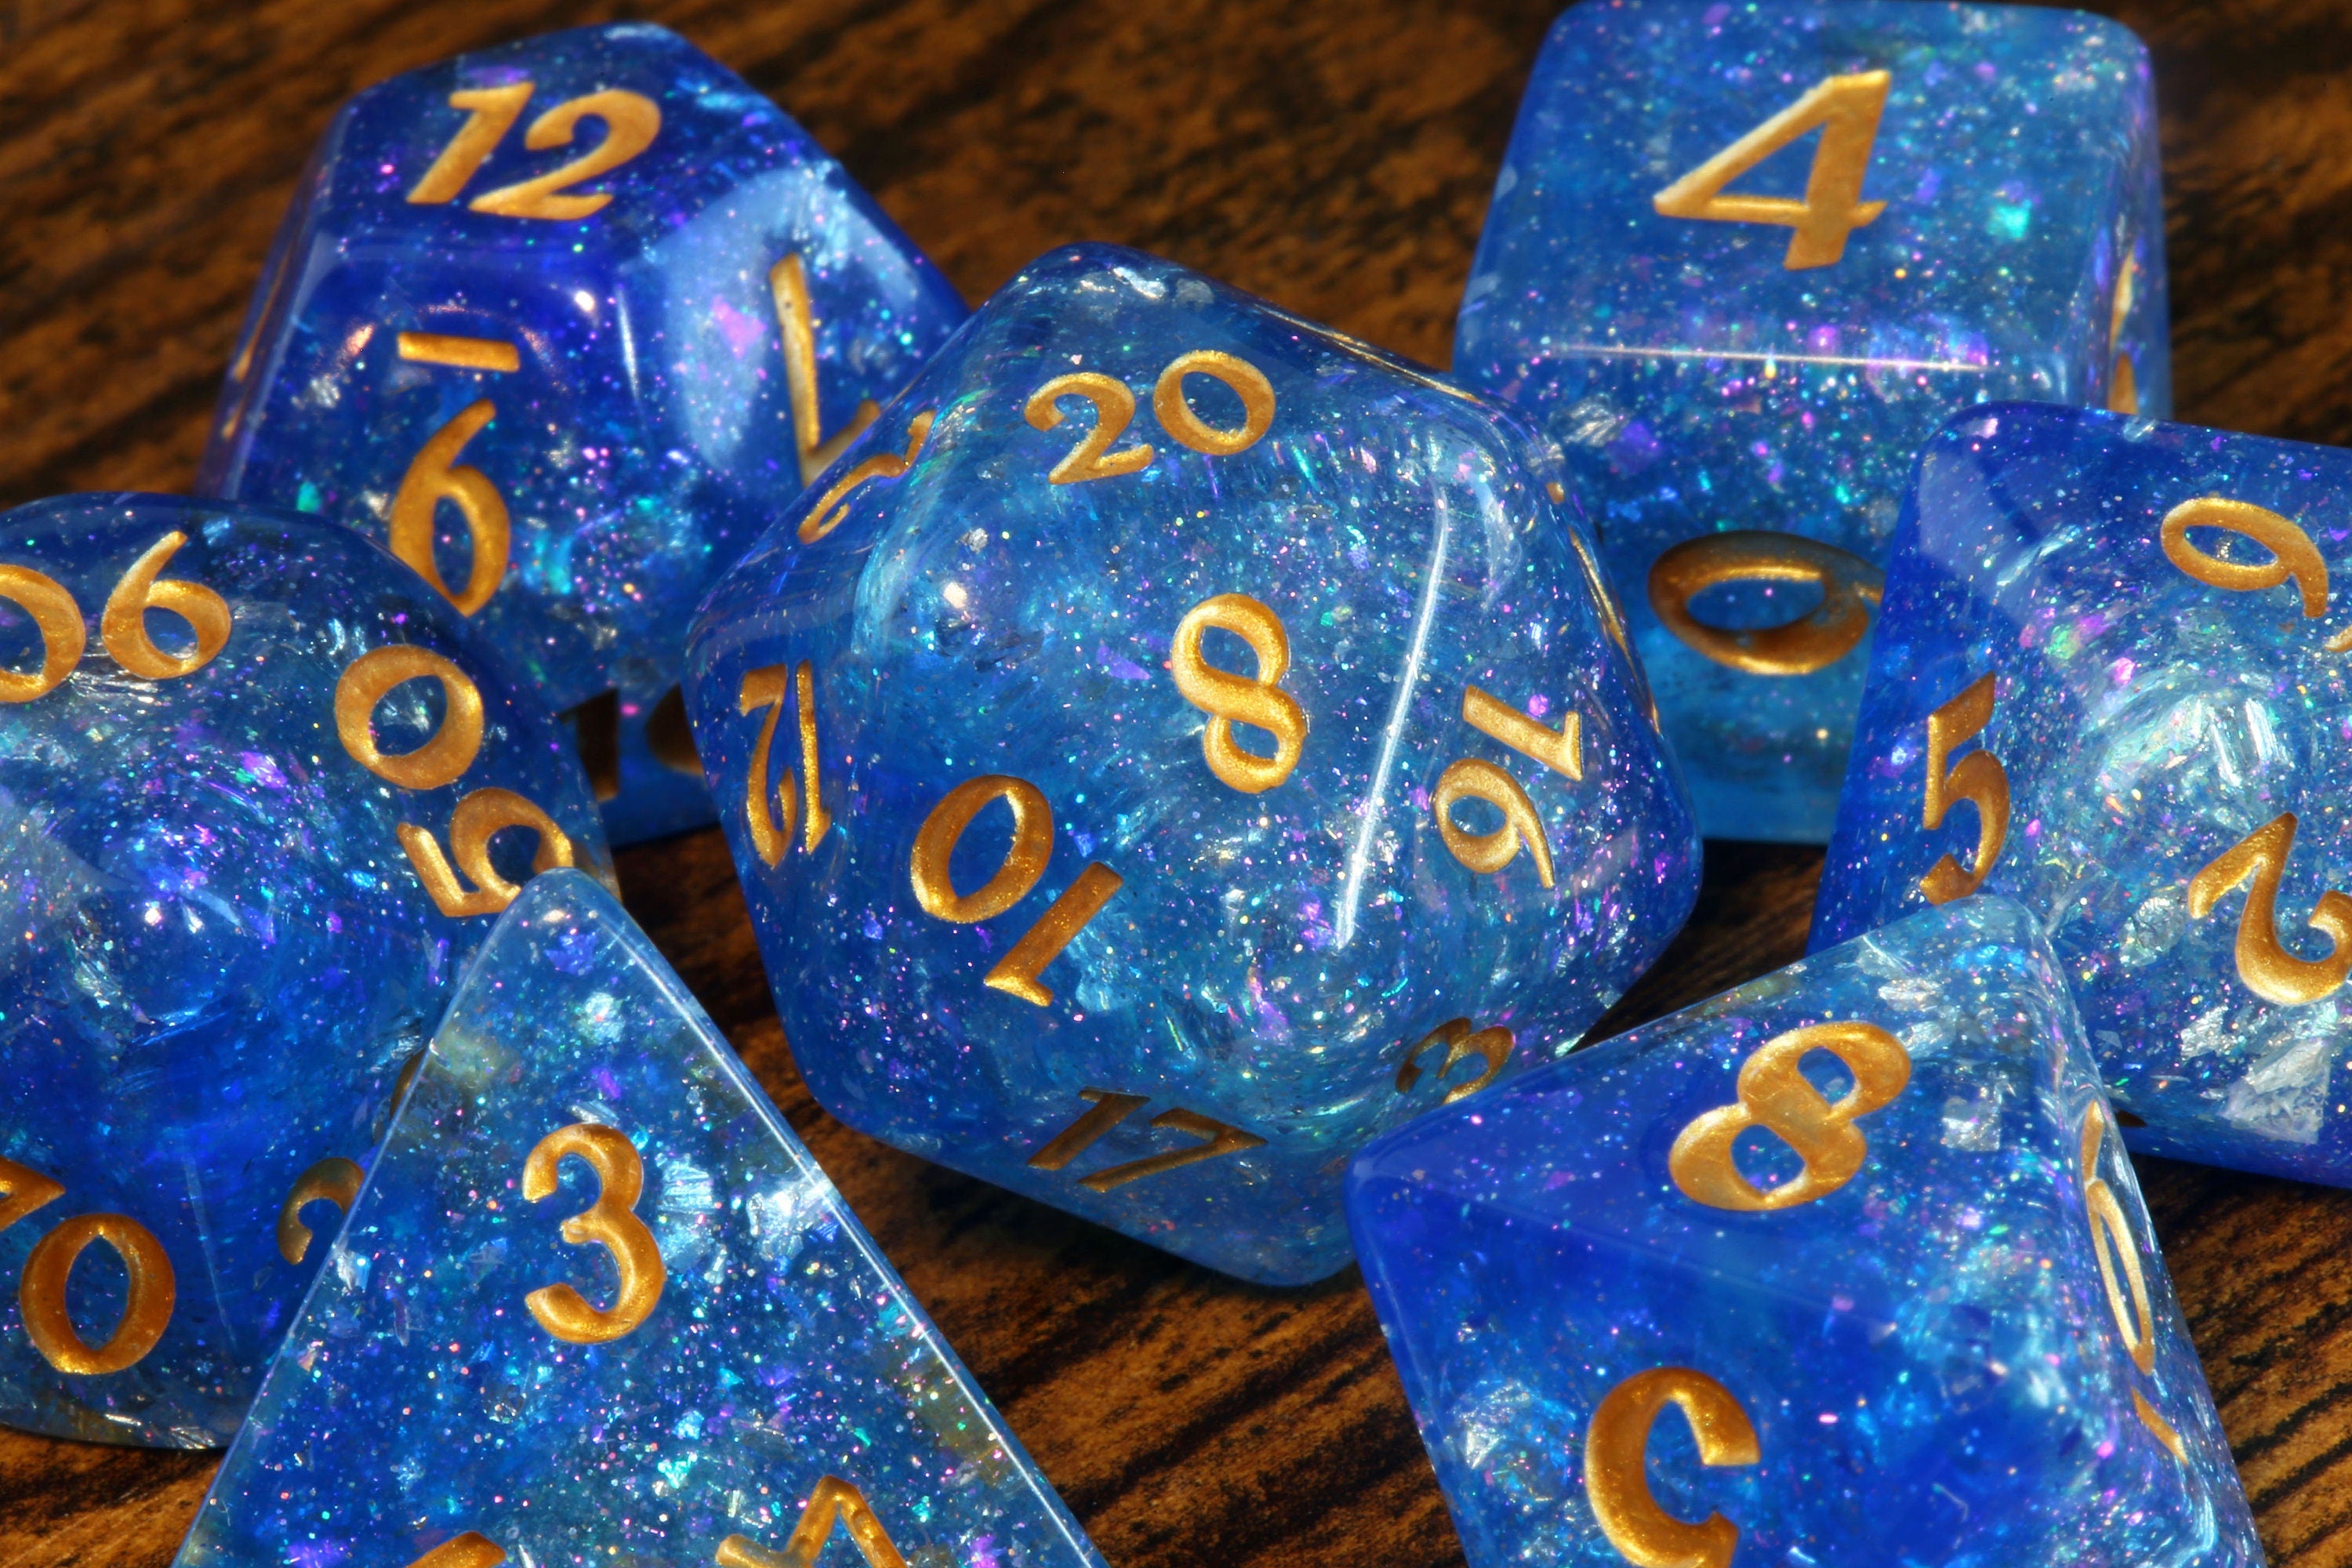 Lunar Dragon dice box with galactic Sapphire dice set